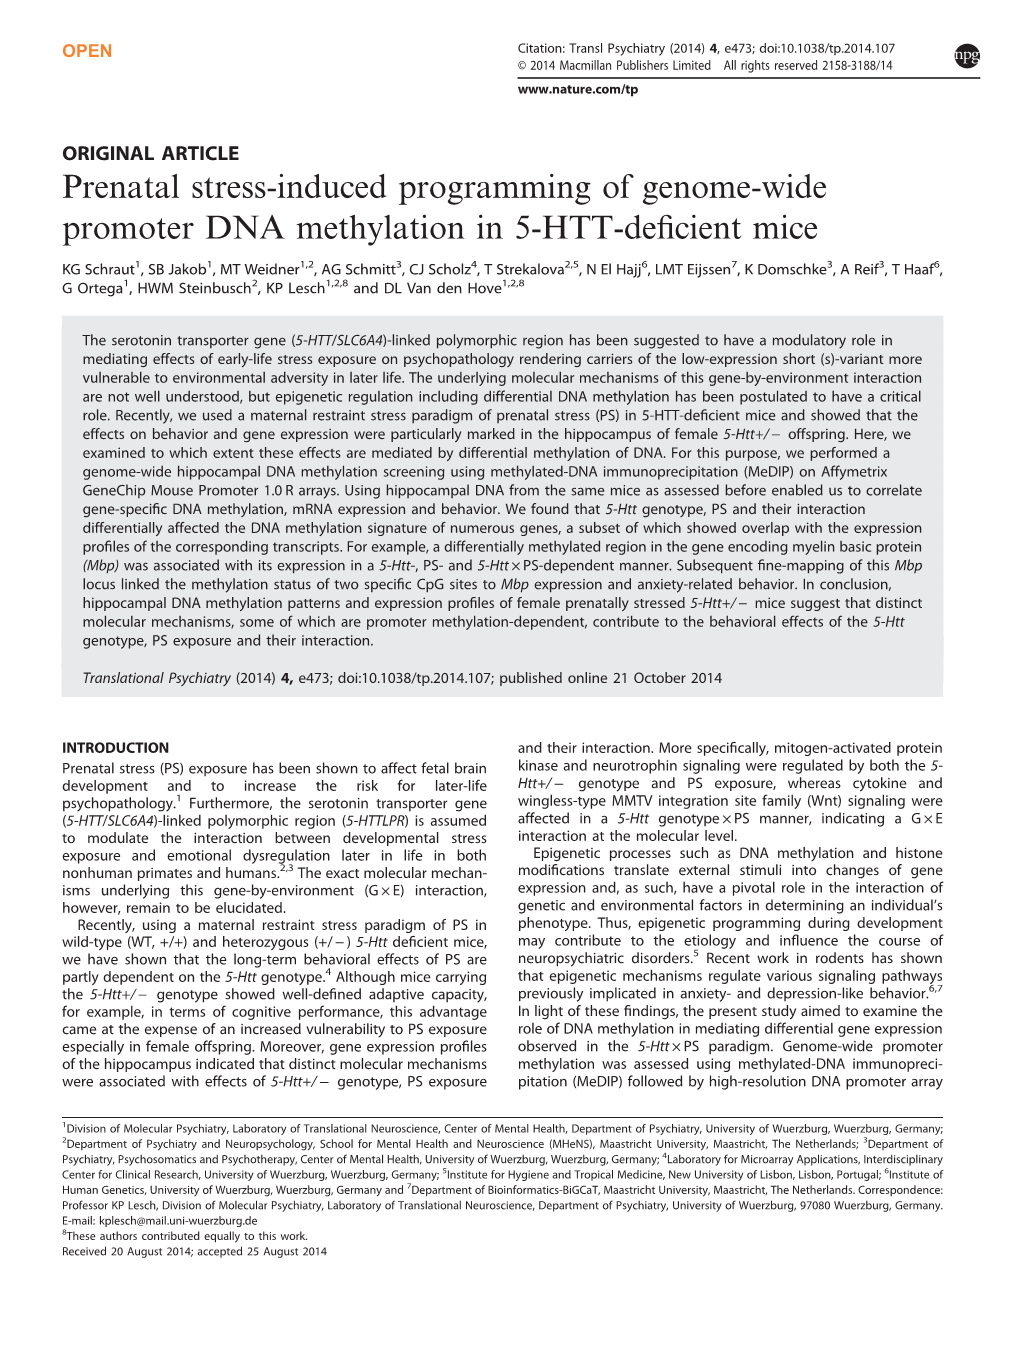 Prenatal Stress-Induced Programming of Genome-Wide Promoter DNA Methylation in 5-HTT-Deﬁcient Mice